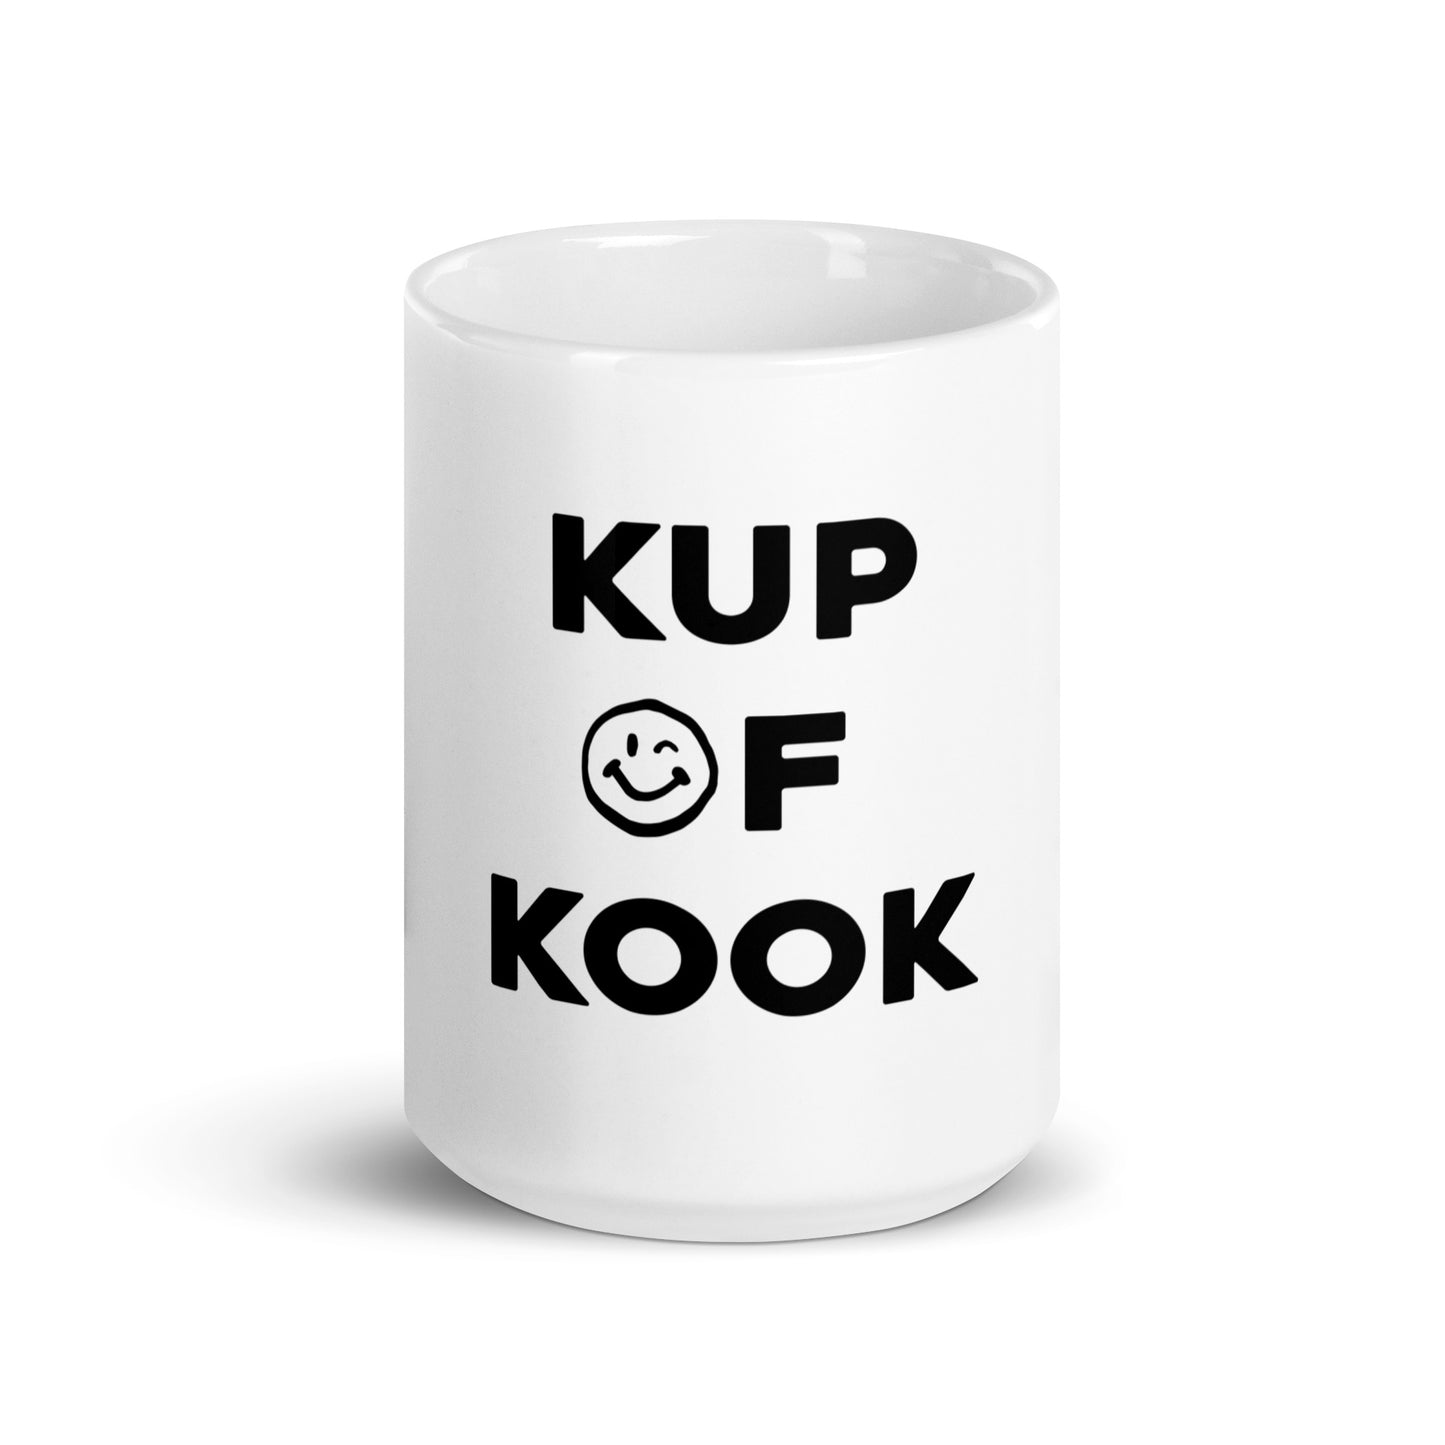 Kup of Kook Mug